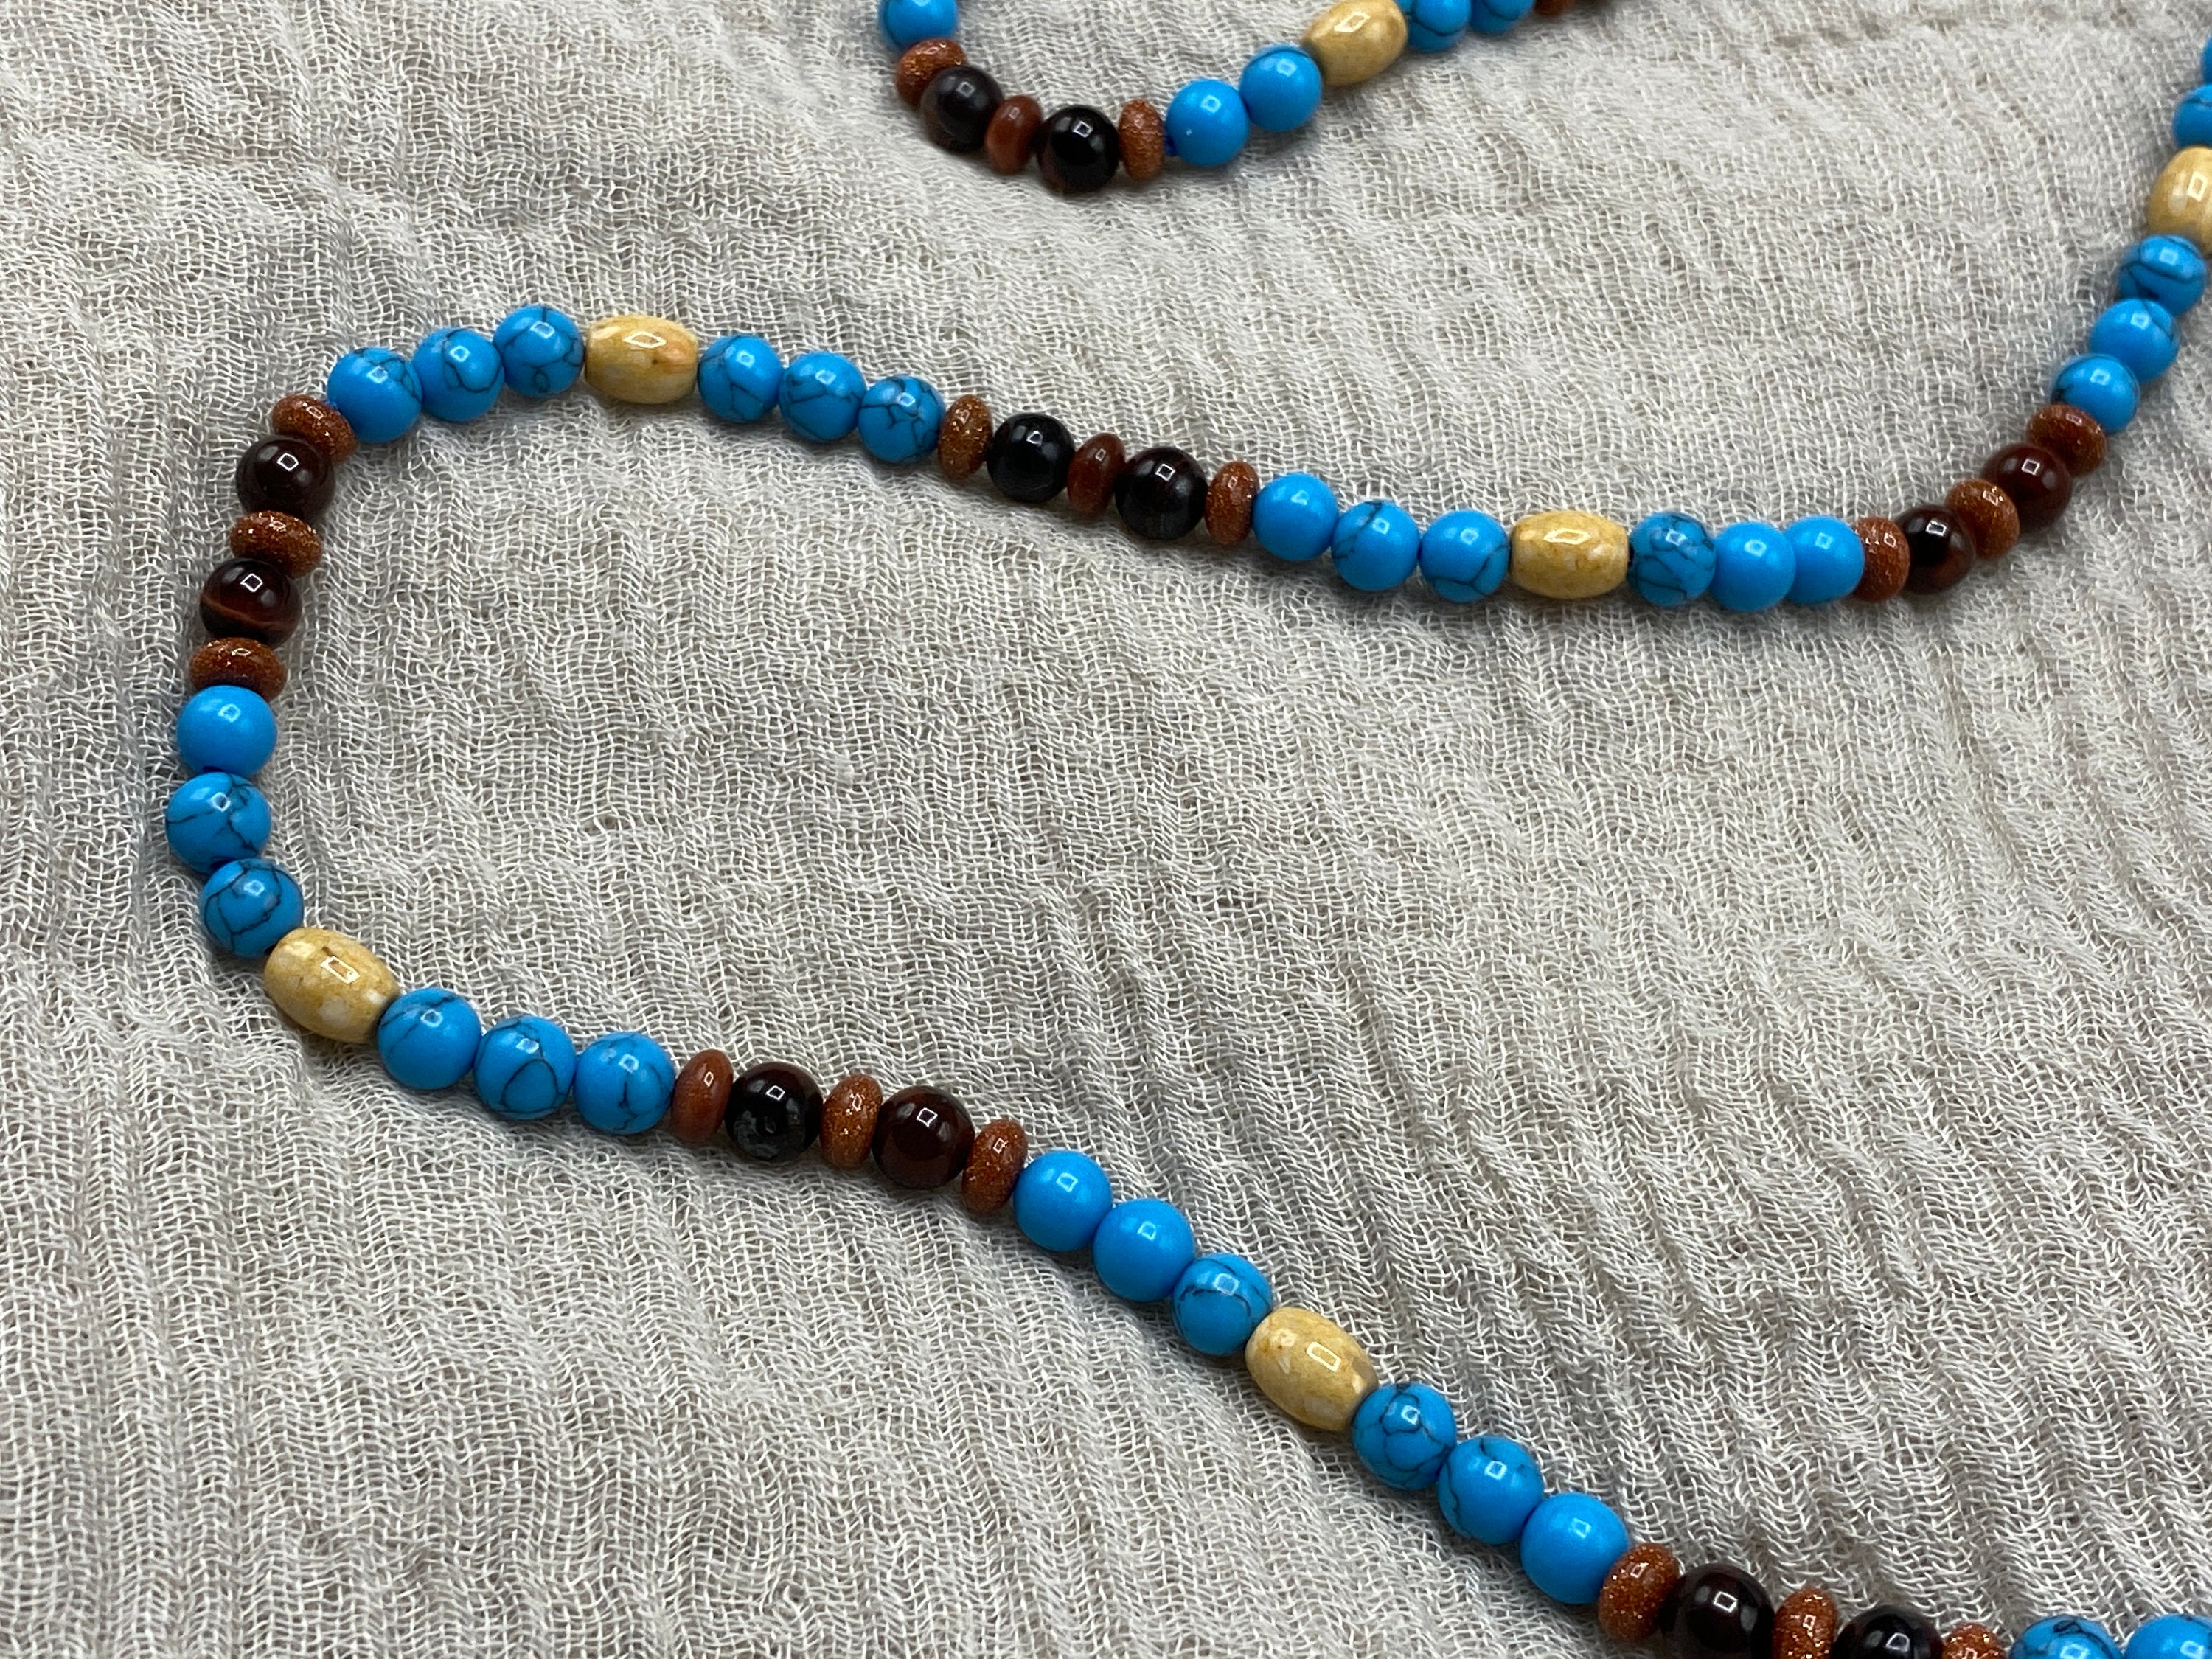 Chakra Jewelry "Shaman's Path" Necklace & Bracelet | Turquoise Red Tigereye Goldstone | Indigenous Powwow Meditation Shamanic Energy Healing - Mama’s Malas jewelry